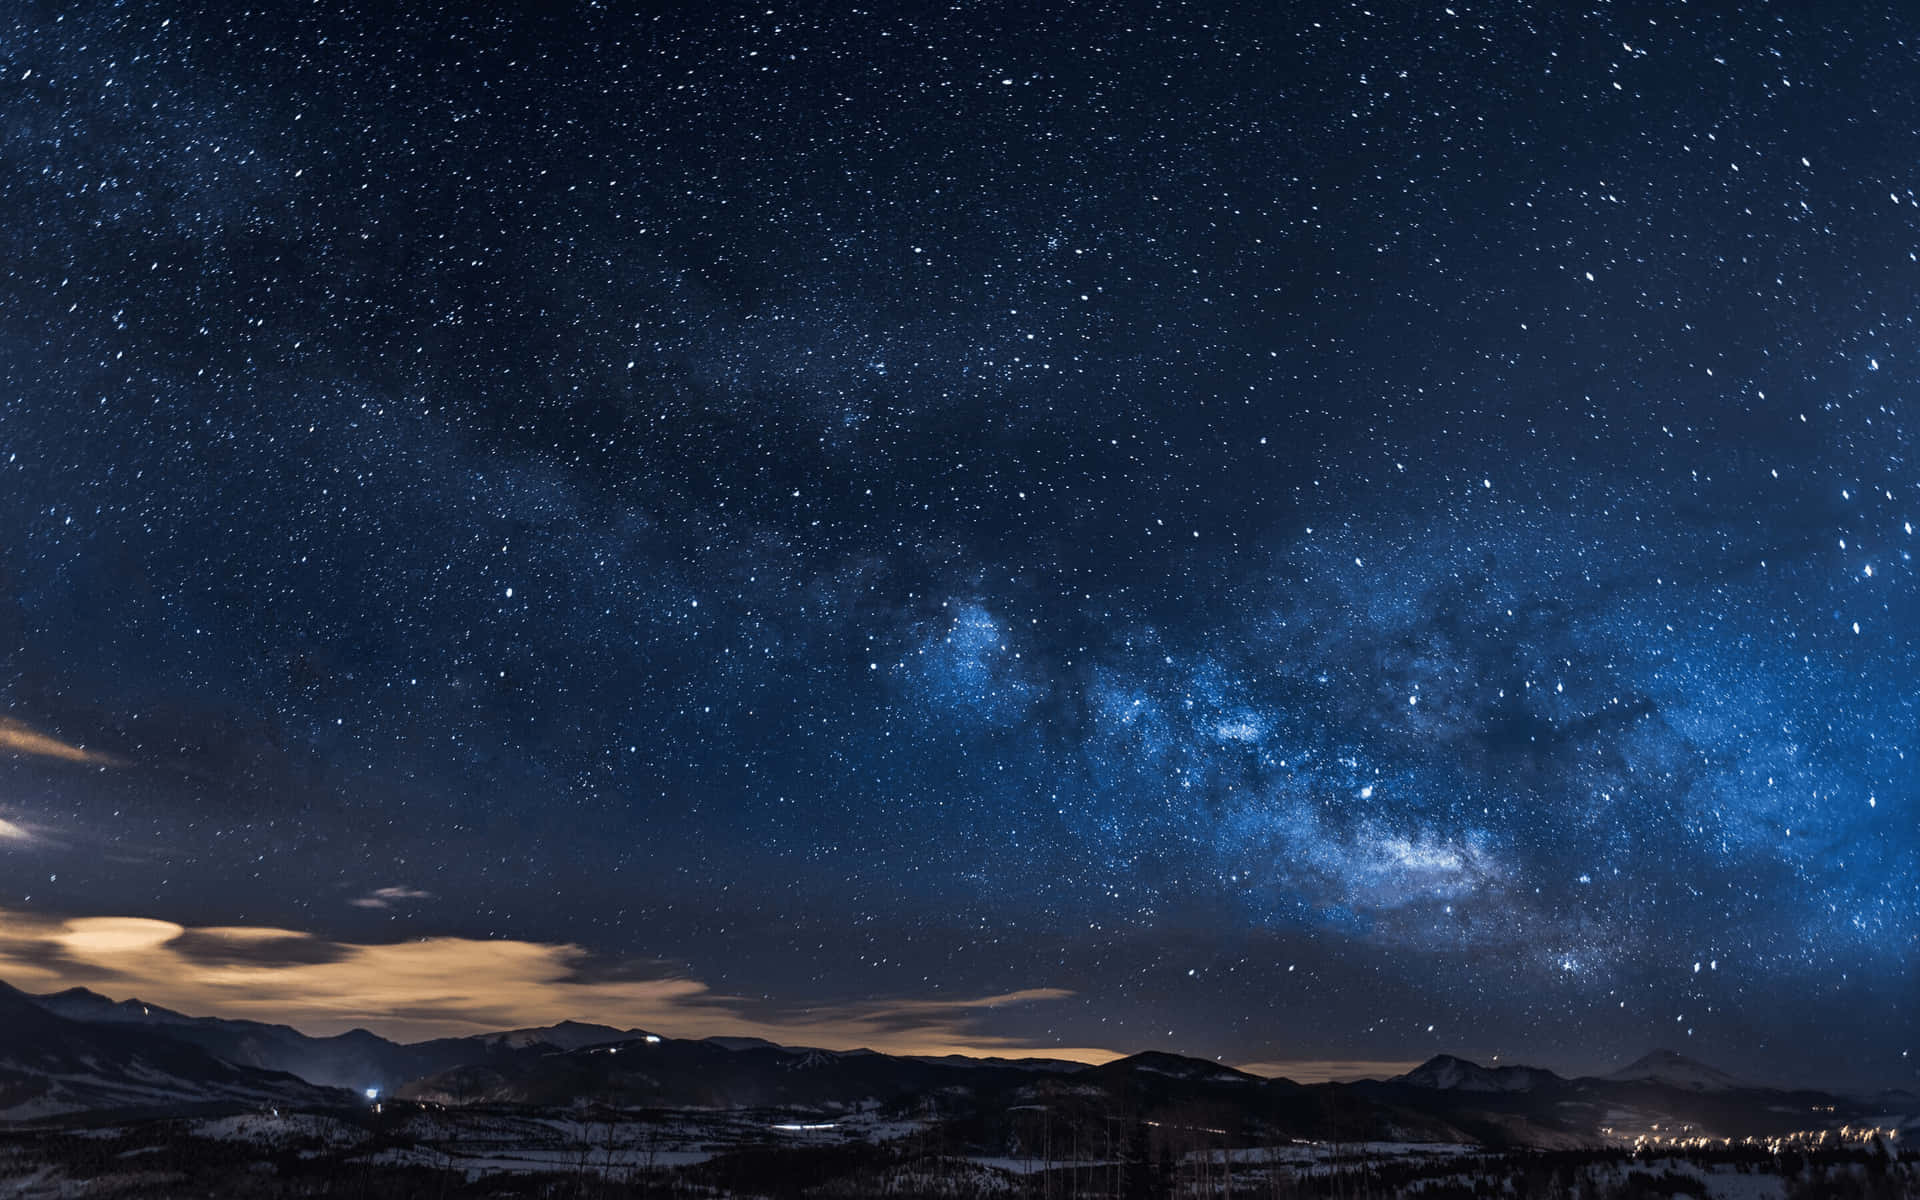 The Milky Way Galaxy Lights Up the Night Sky